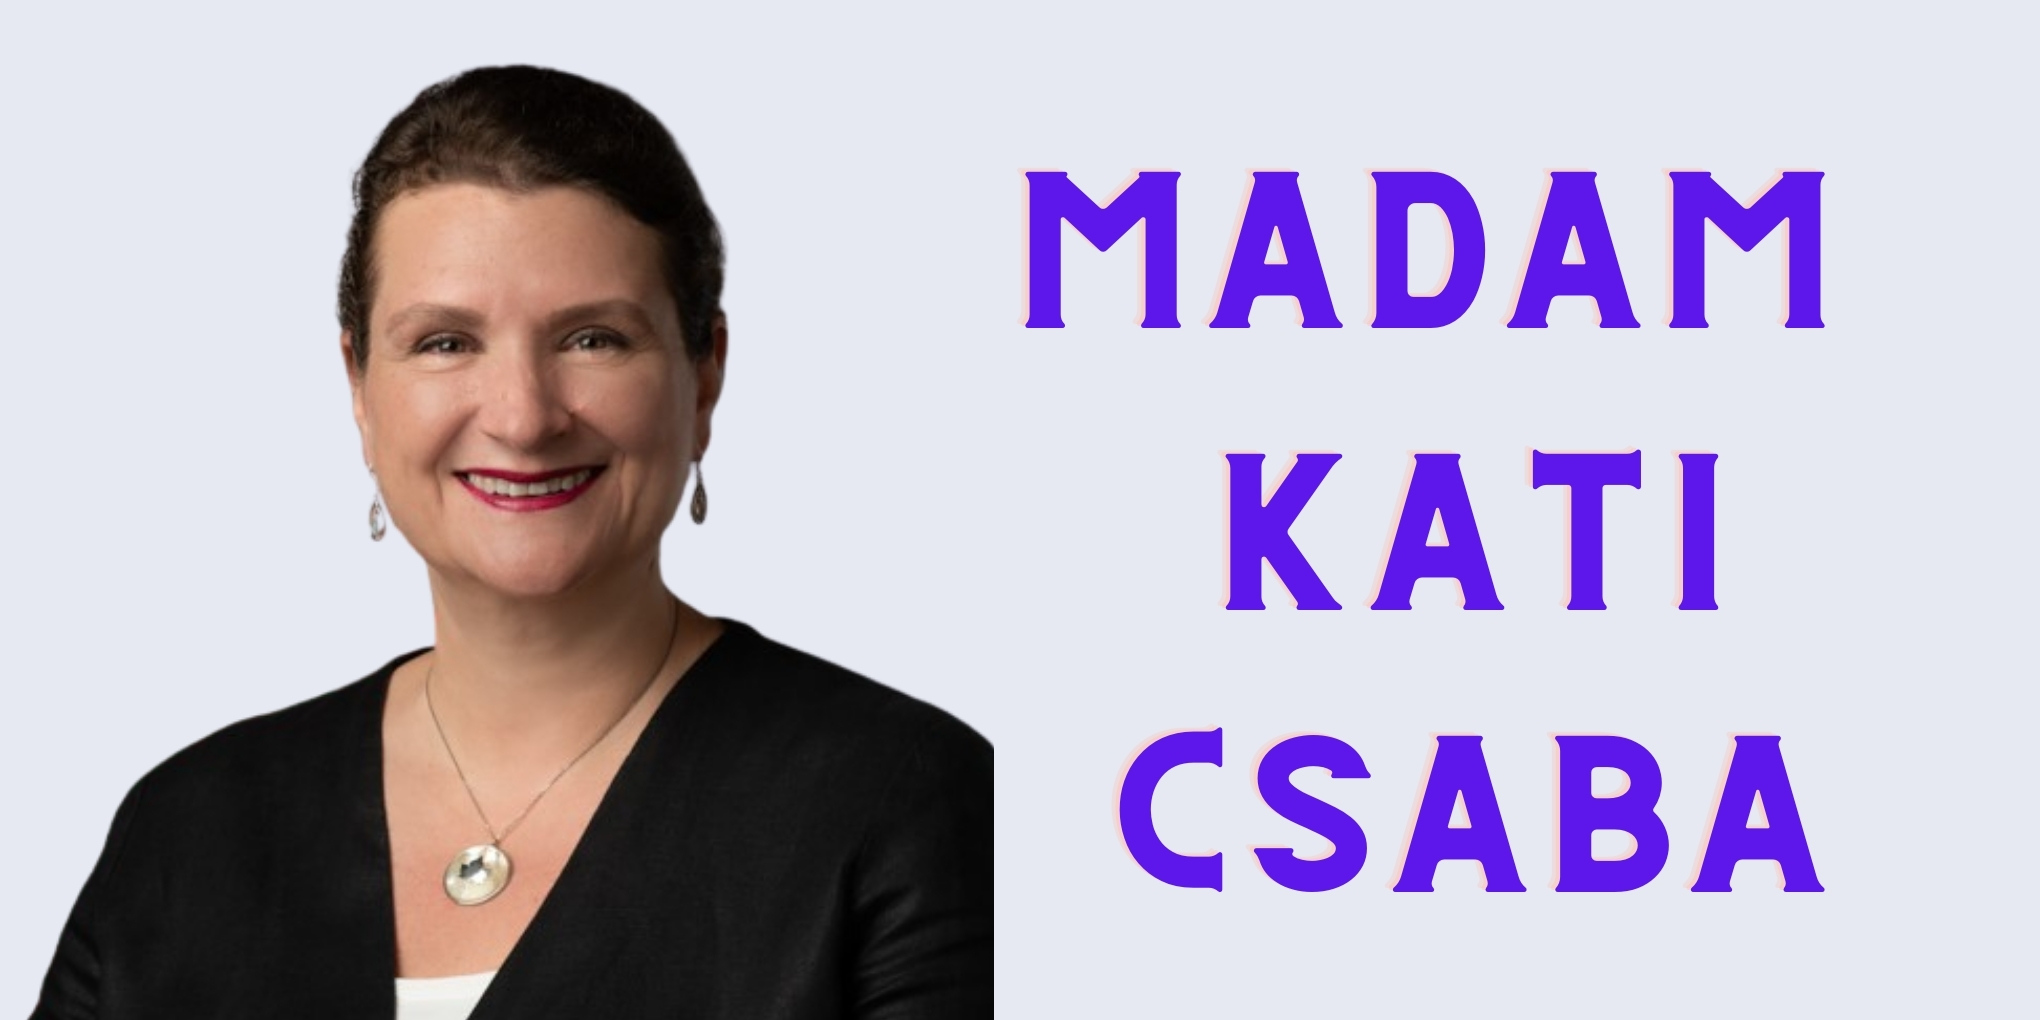 Madam Kati Csaba